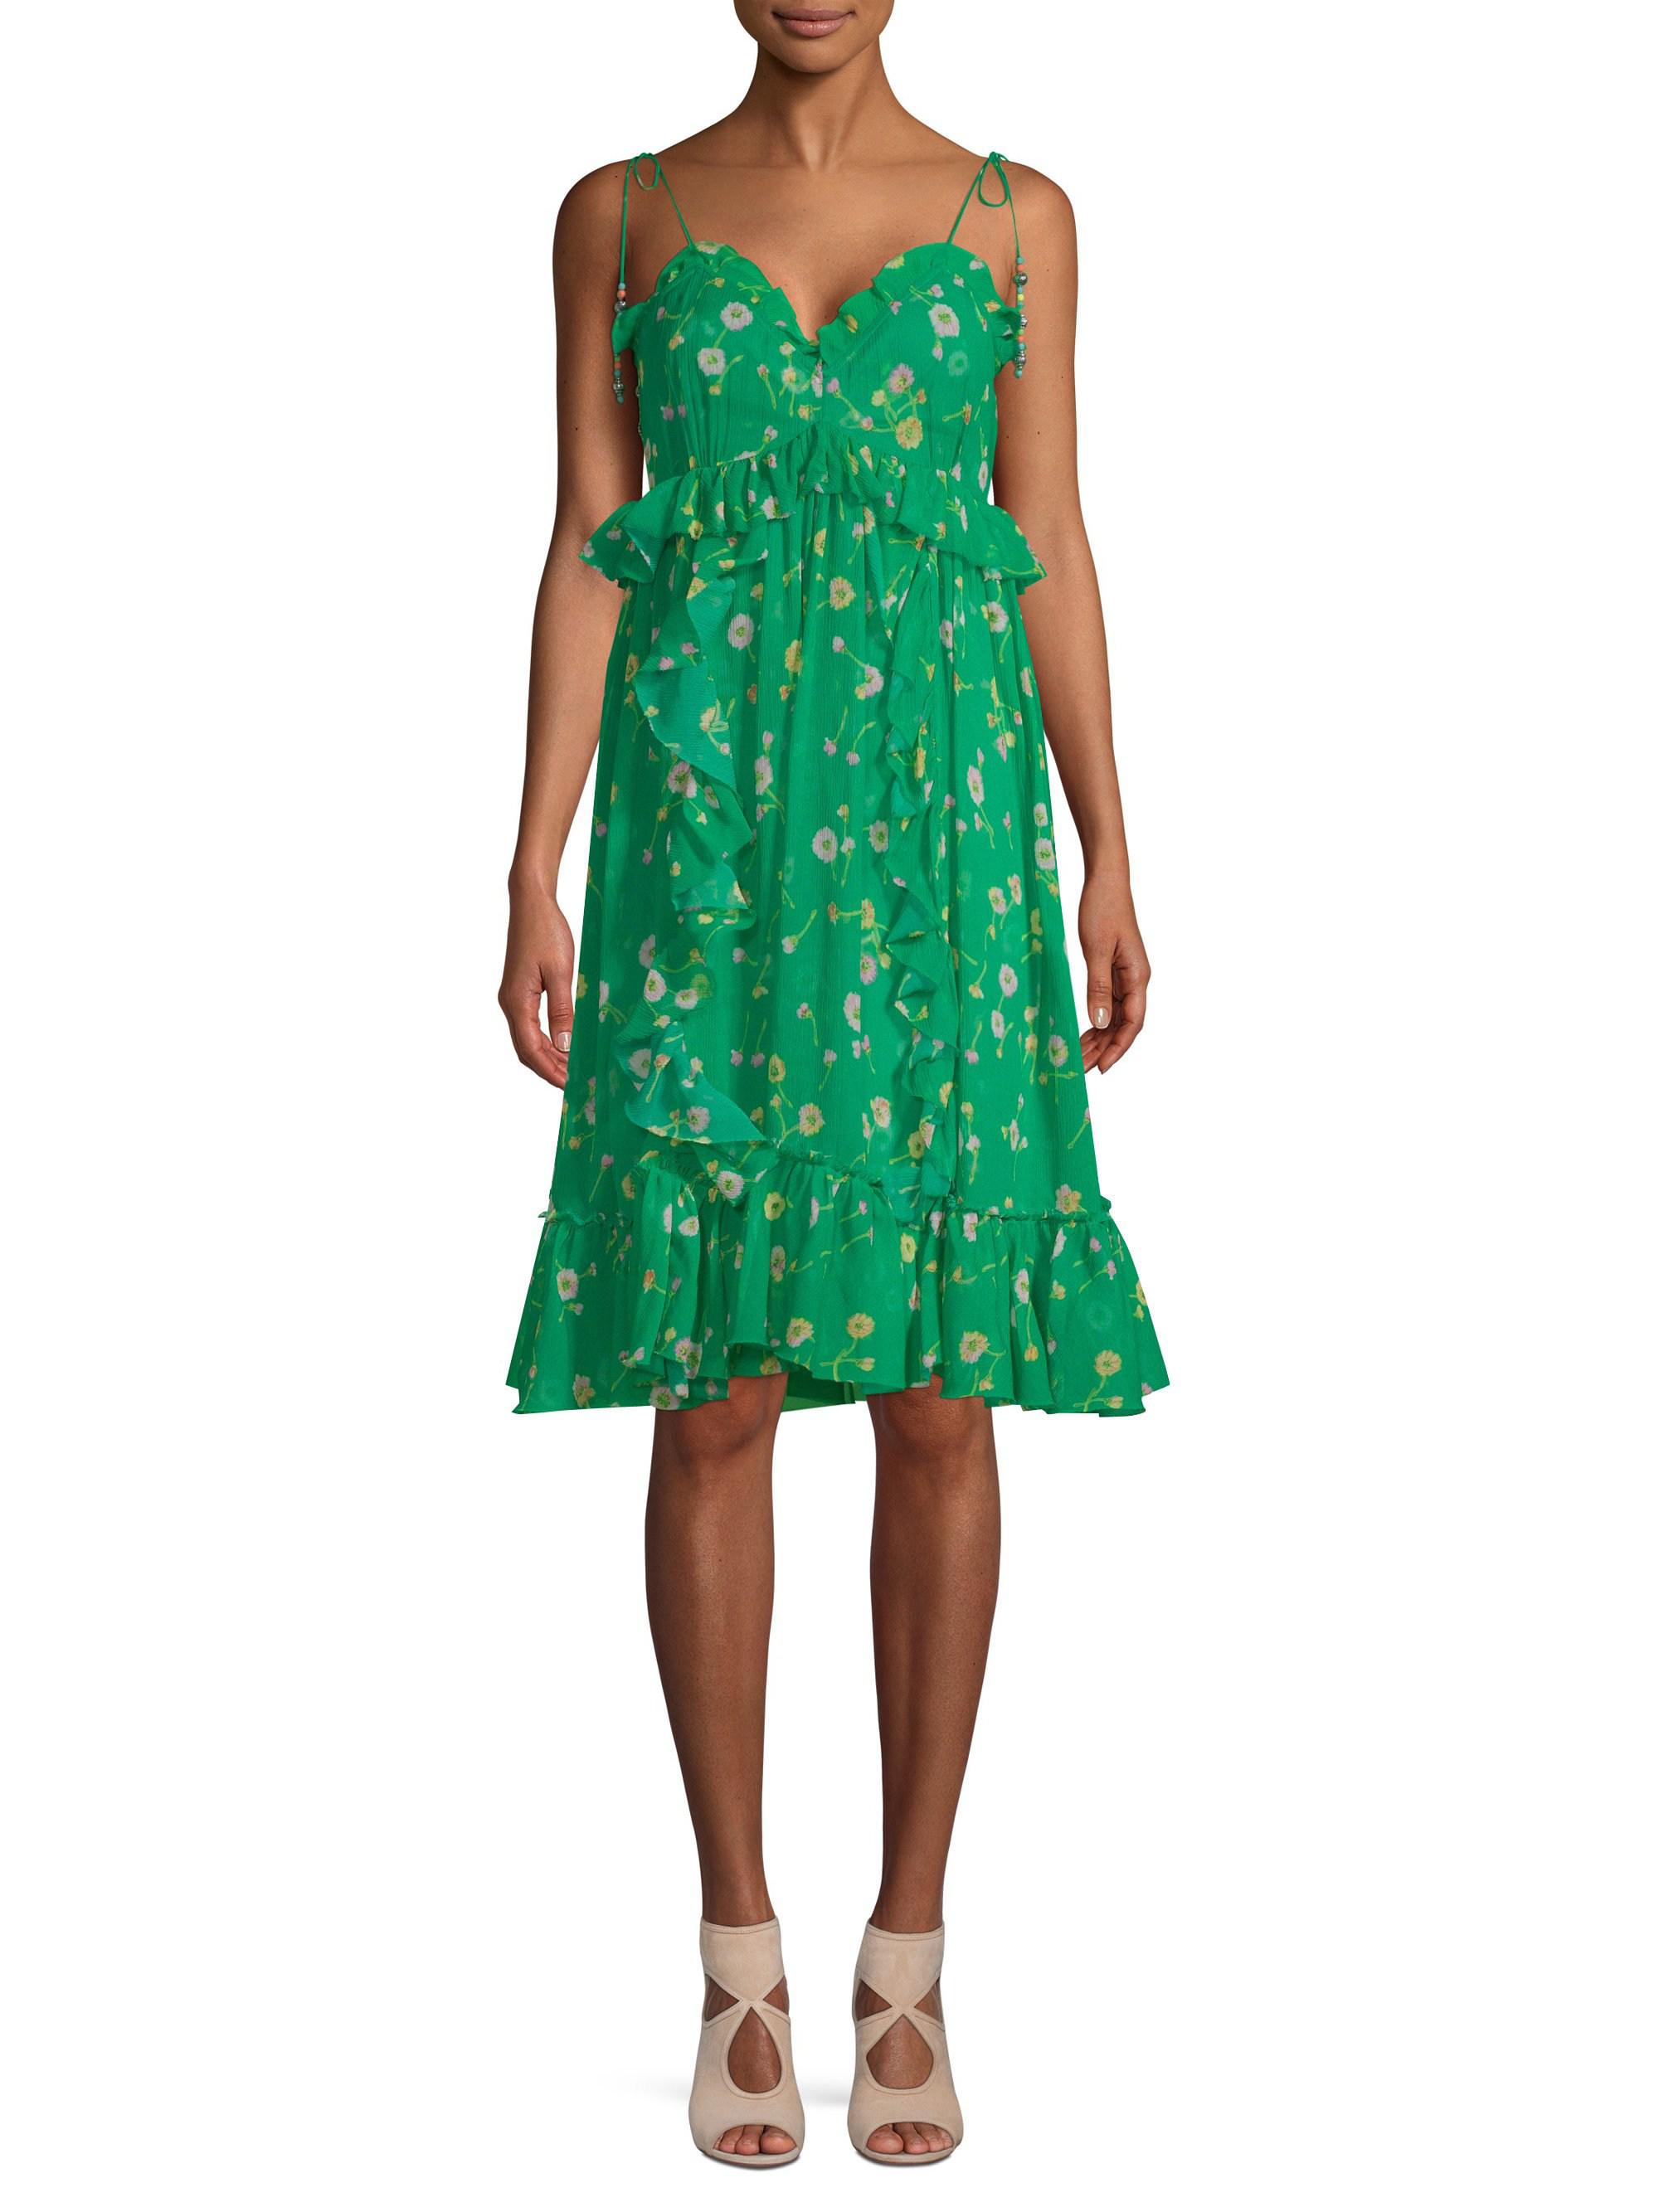 The Kooples Silk Floral Shoulder Tie Dress in Green - Lyst